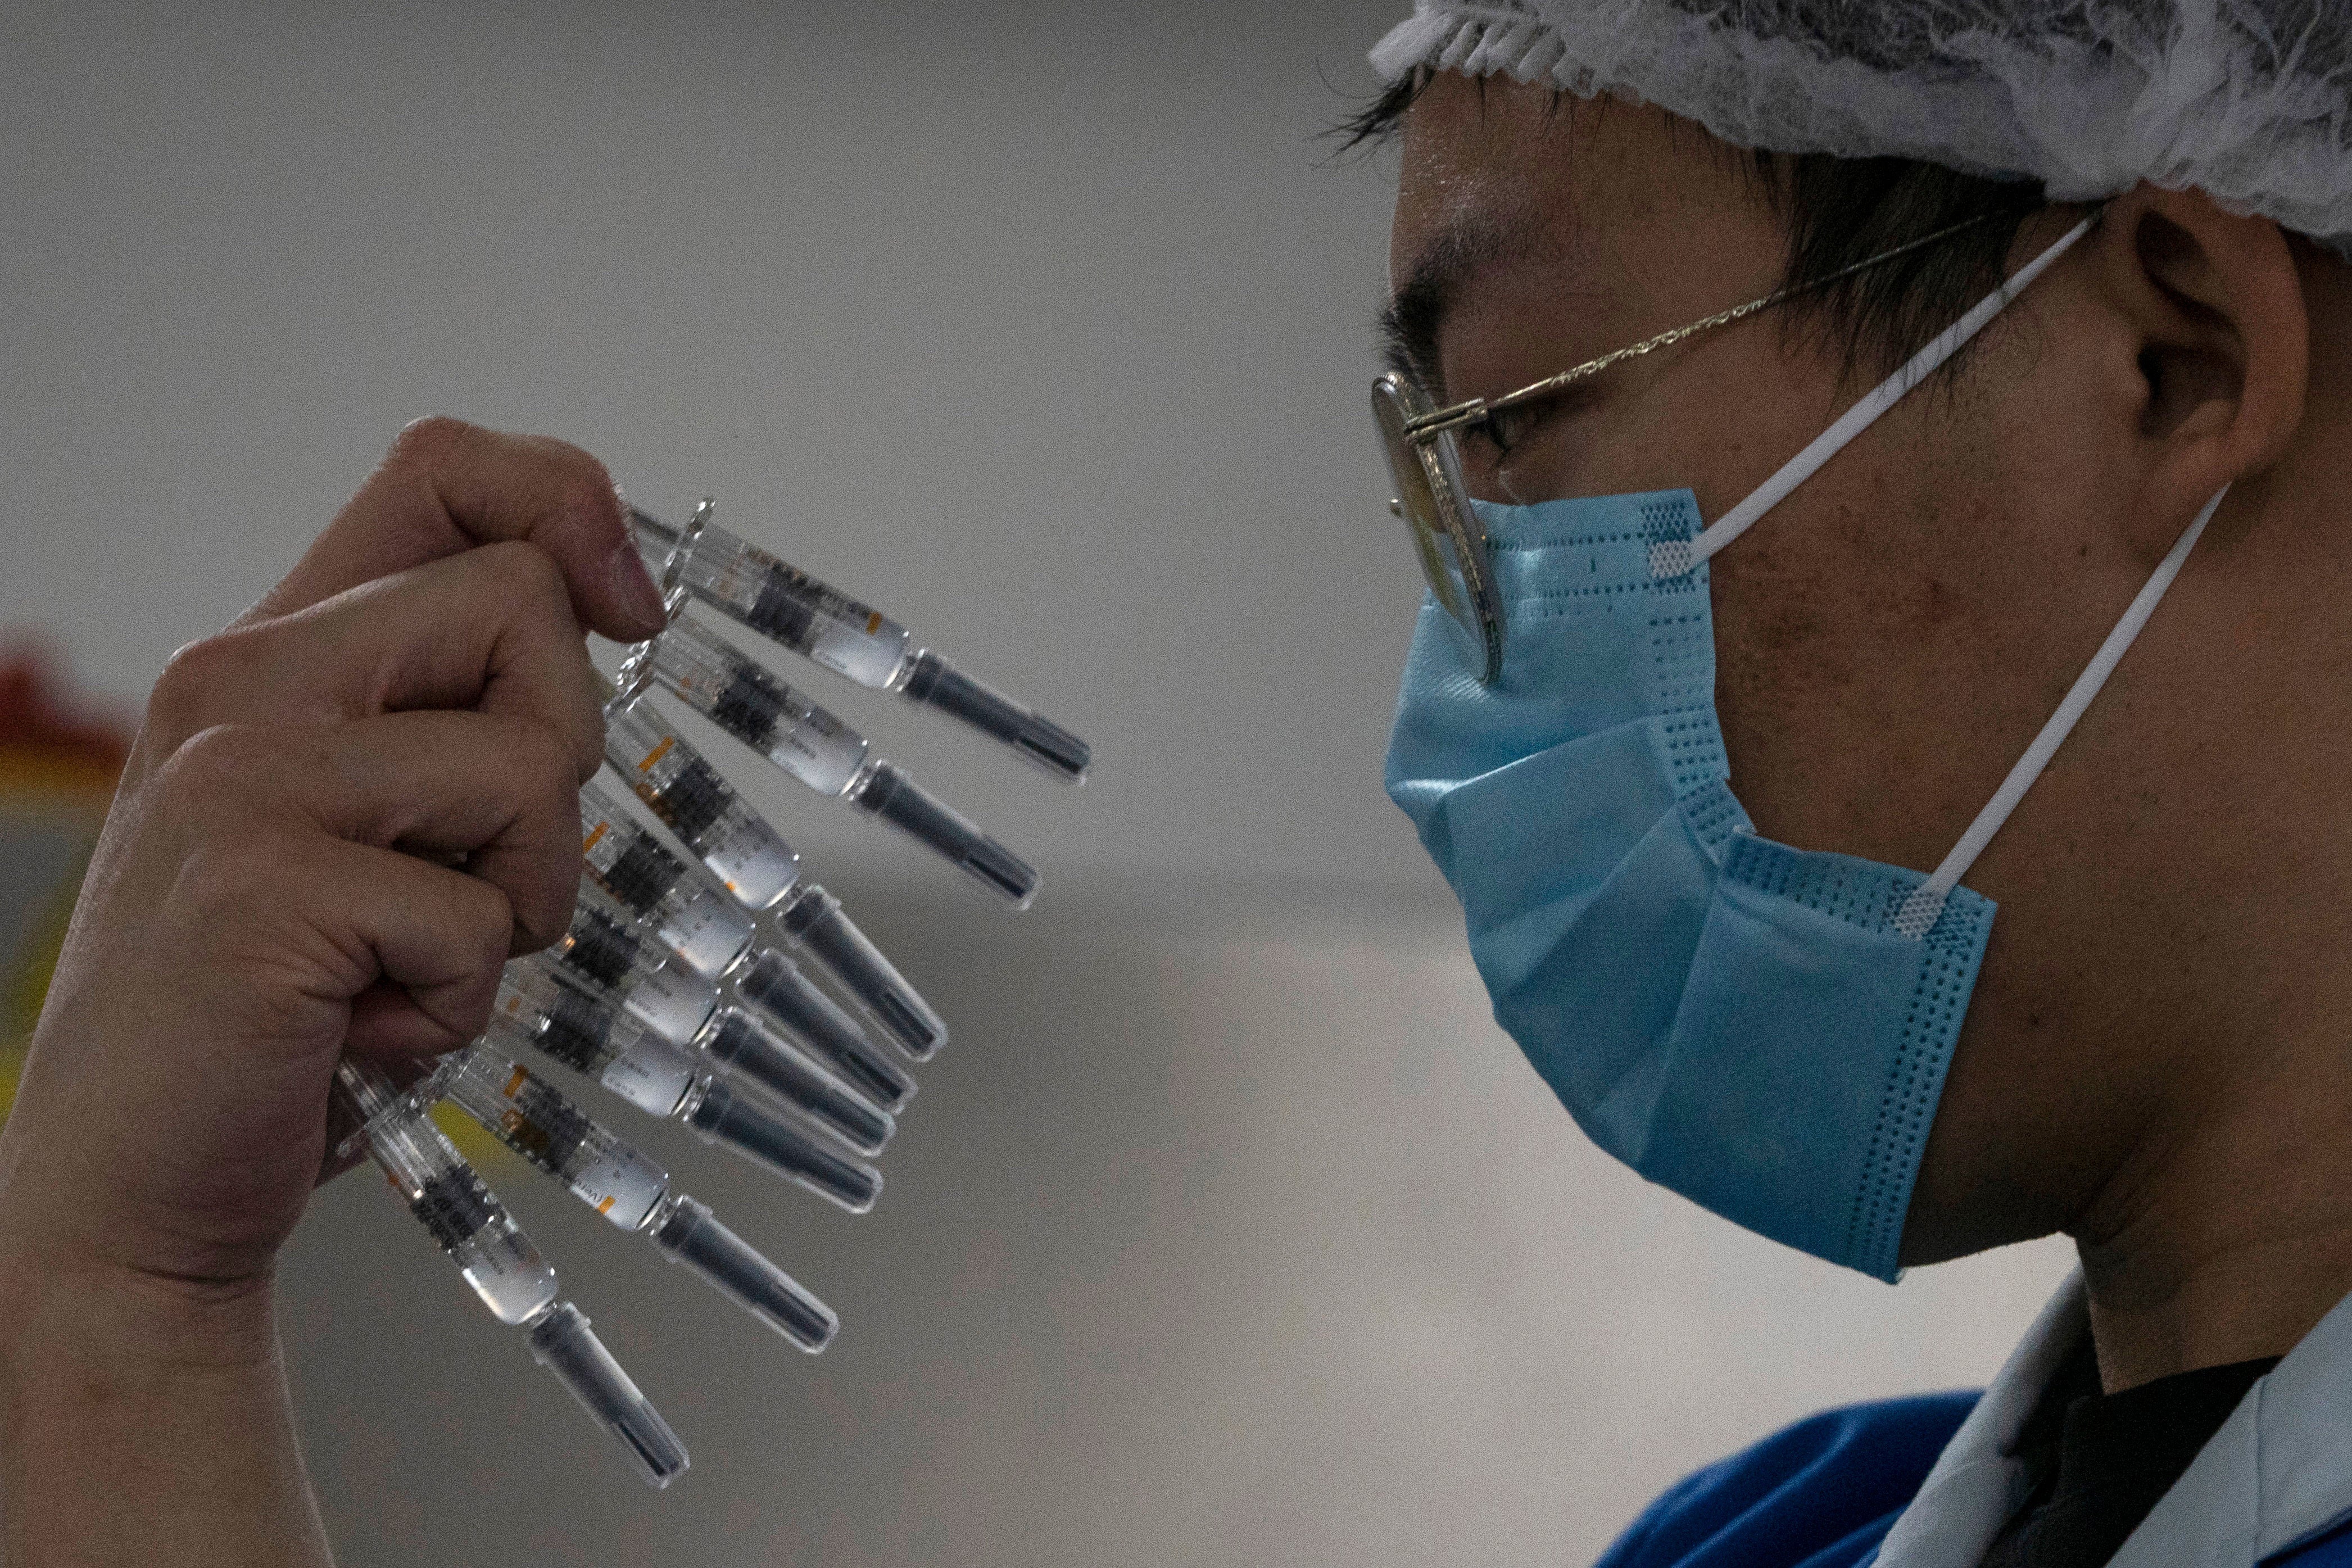 Virus Outbreak China Vaccines